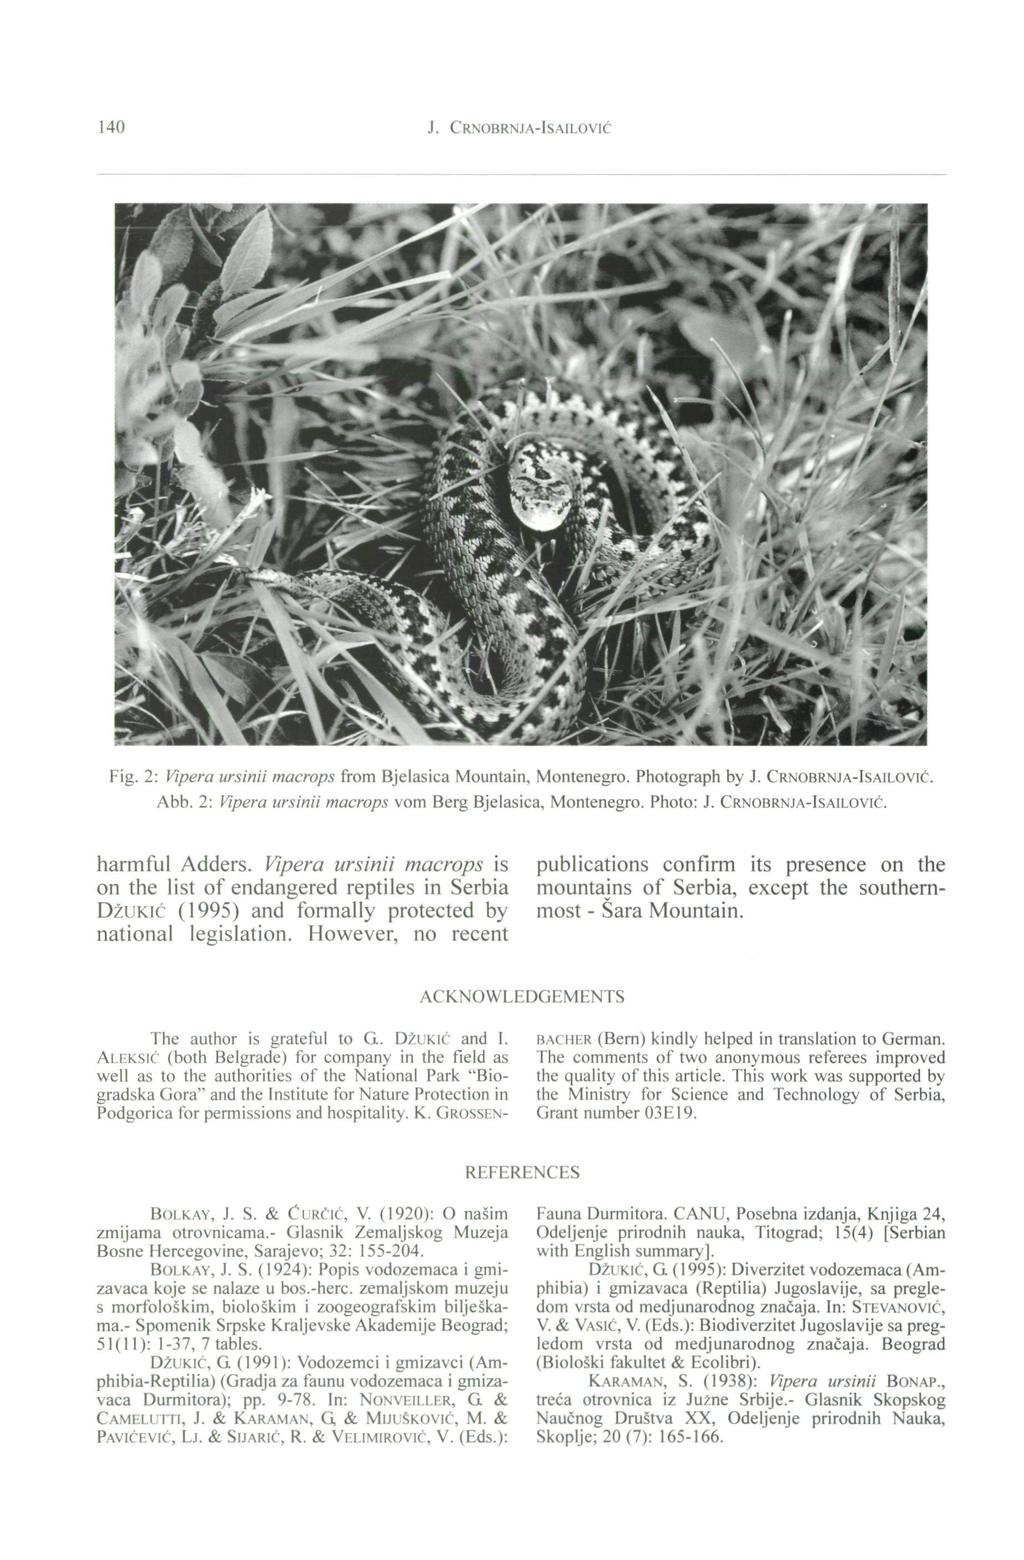 140 J. CRNOBRNJA-ISAILOVIC Fig. 2: (^pero ursinii macrops from Bjelasica Mountain, Montenegro. Photograph by J. CRNOBRNJA-ISAILOVIC. Abb. 2: Vipera ursinii macrops vom Berg Bjelasica, Montenegro.